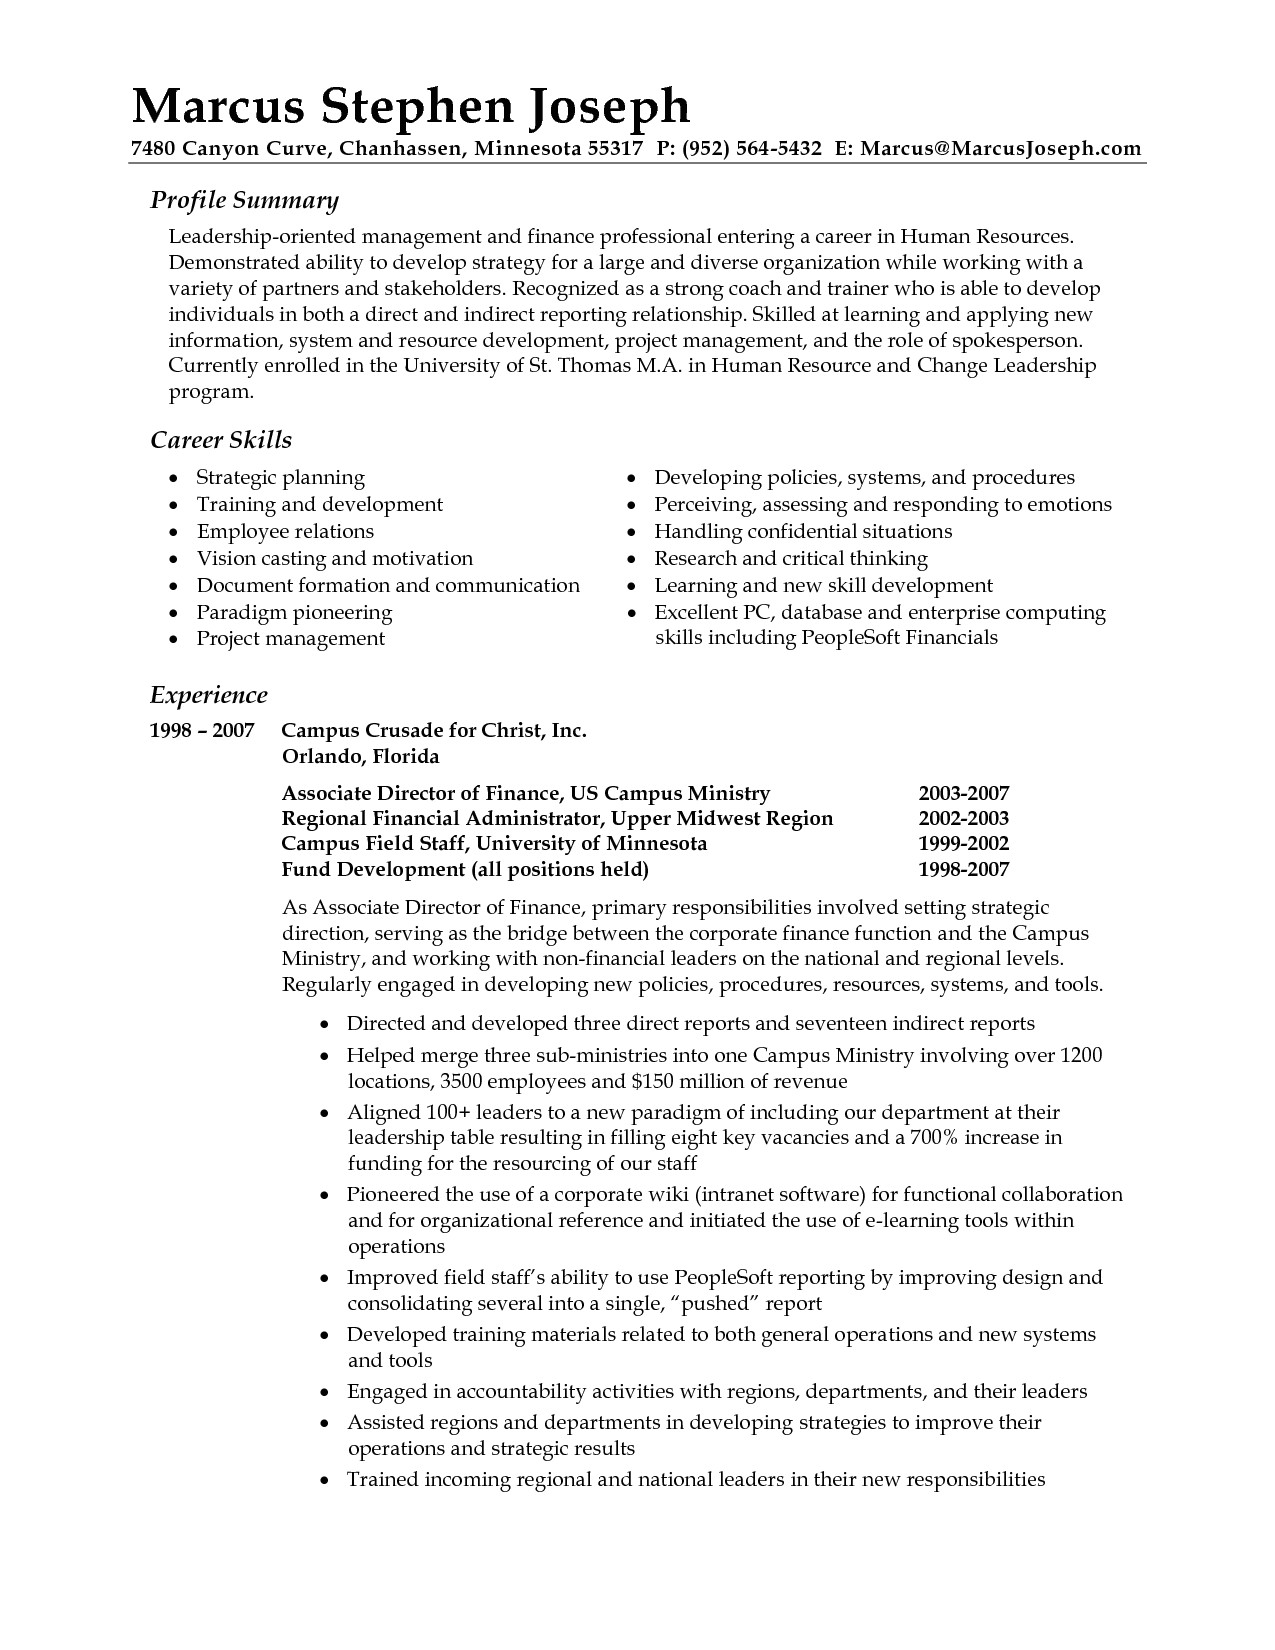 resume summary examples 2556